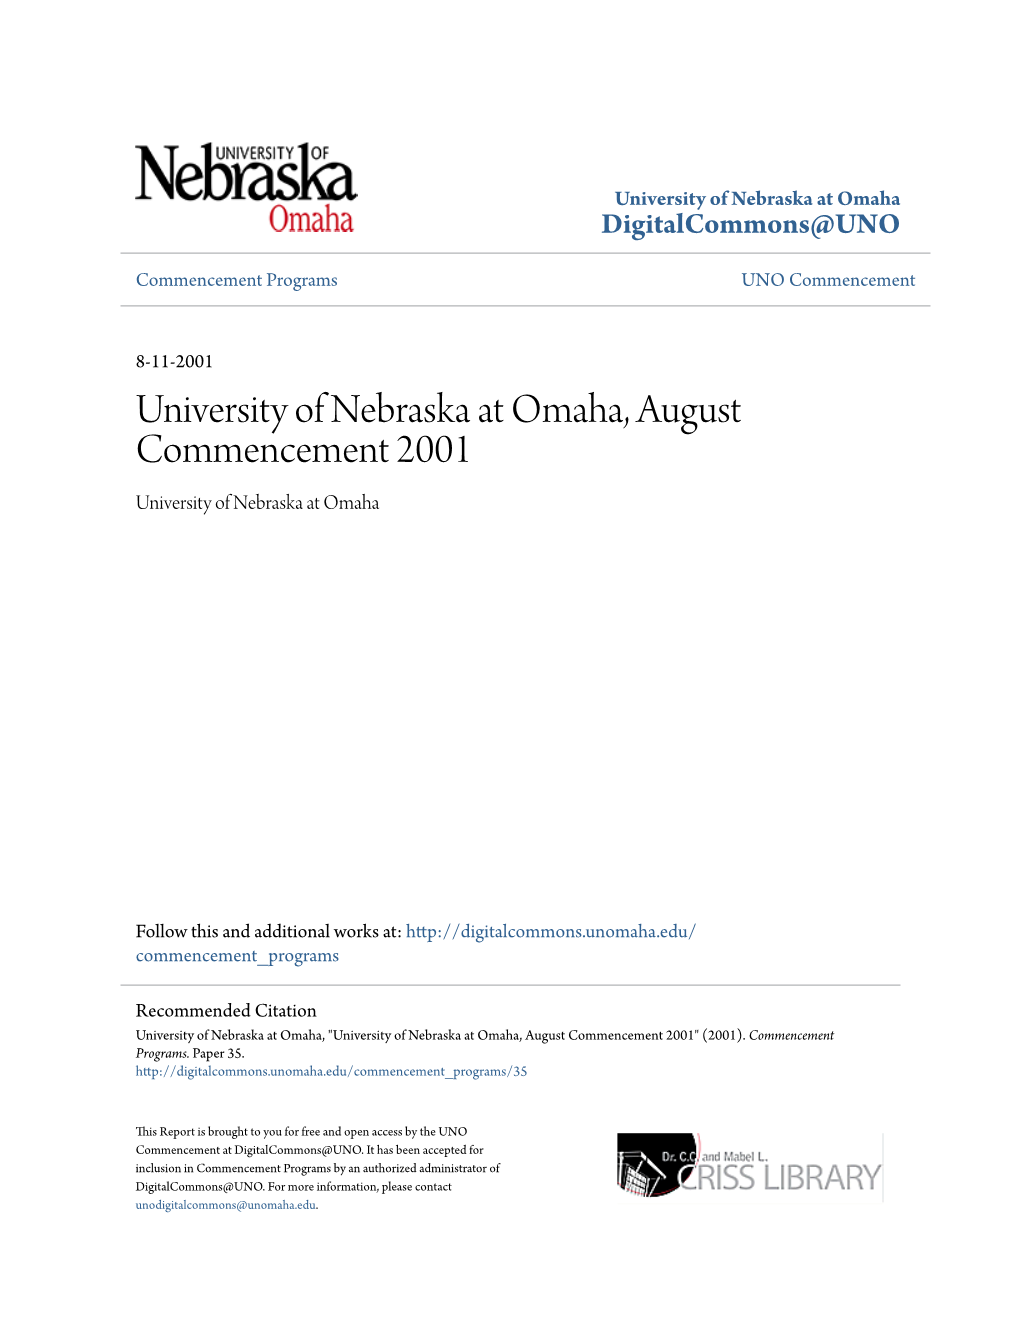 University of Nebraska at Omaha, August Commencement 2001 University of Nebraska at Omaha